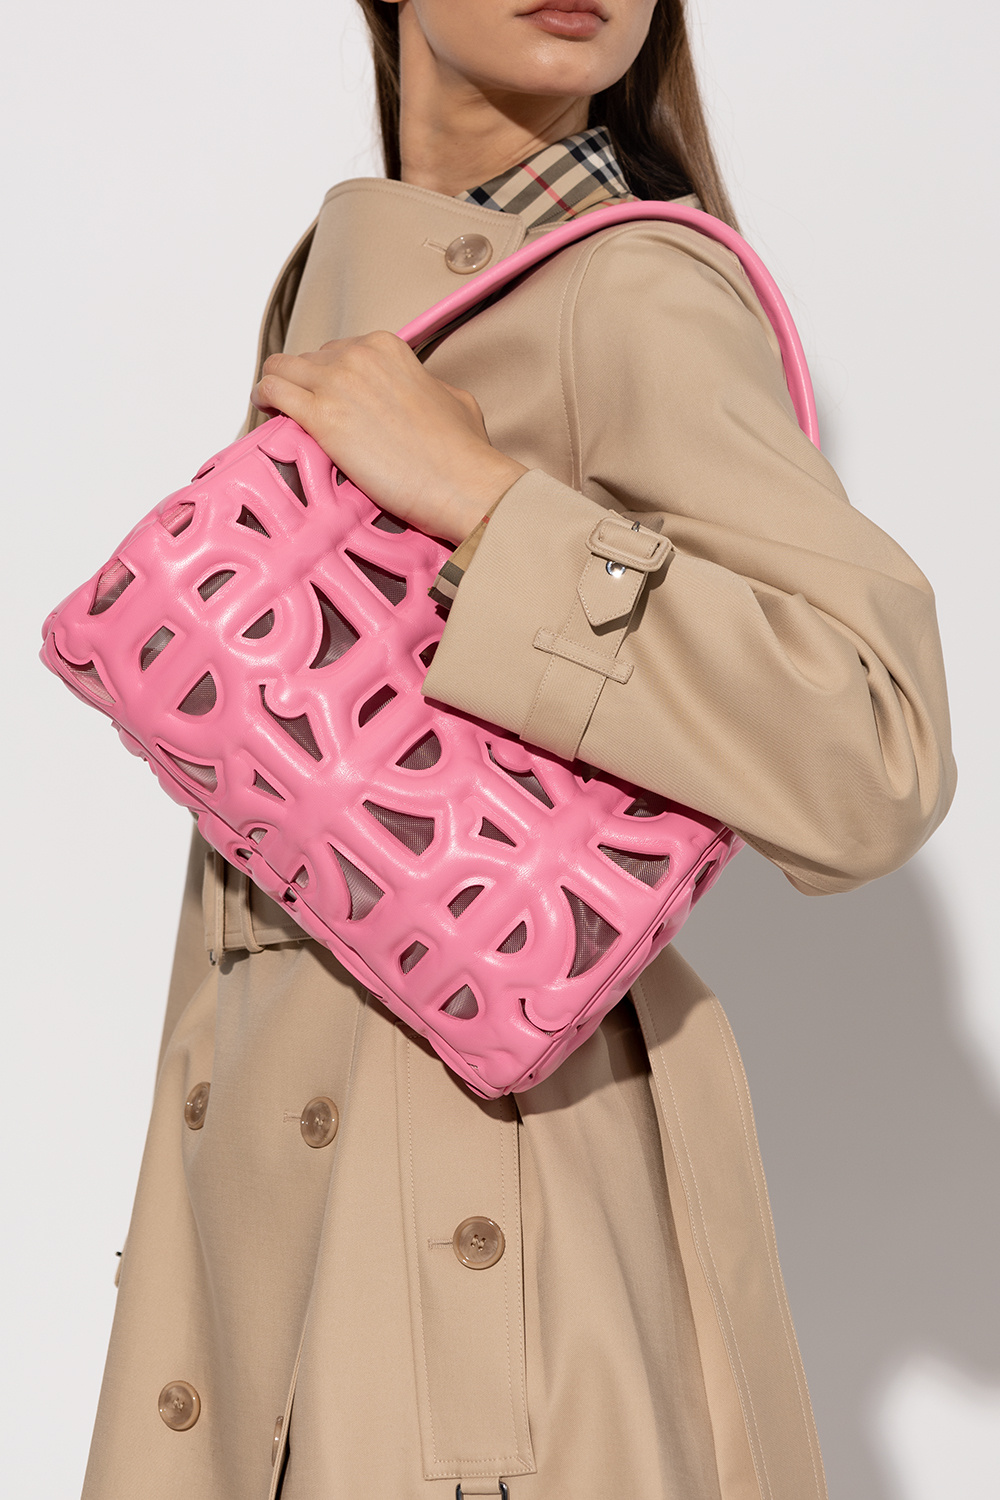 Burberry Women's 'rhombi' Shoulder Bag - Pink - Shoulder Bags